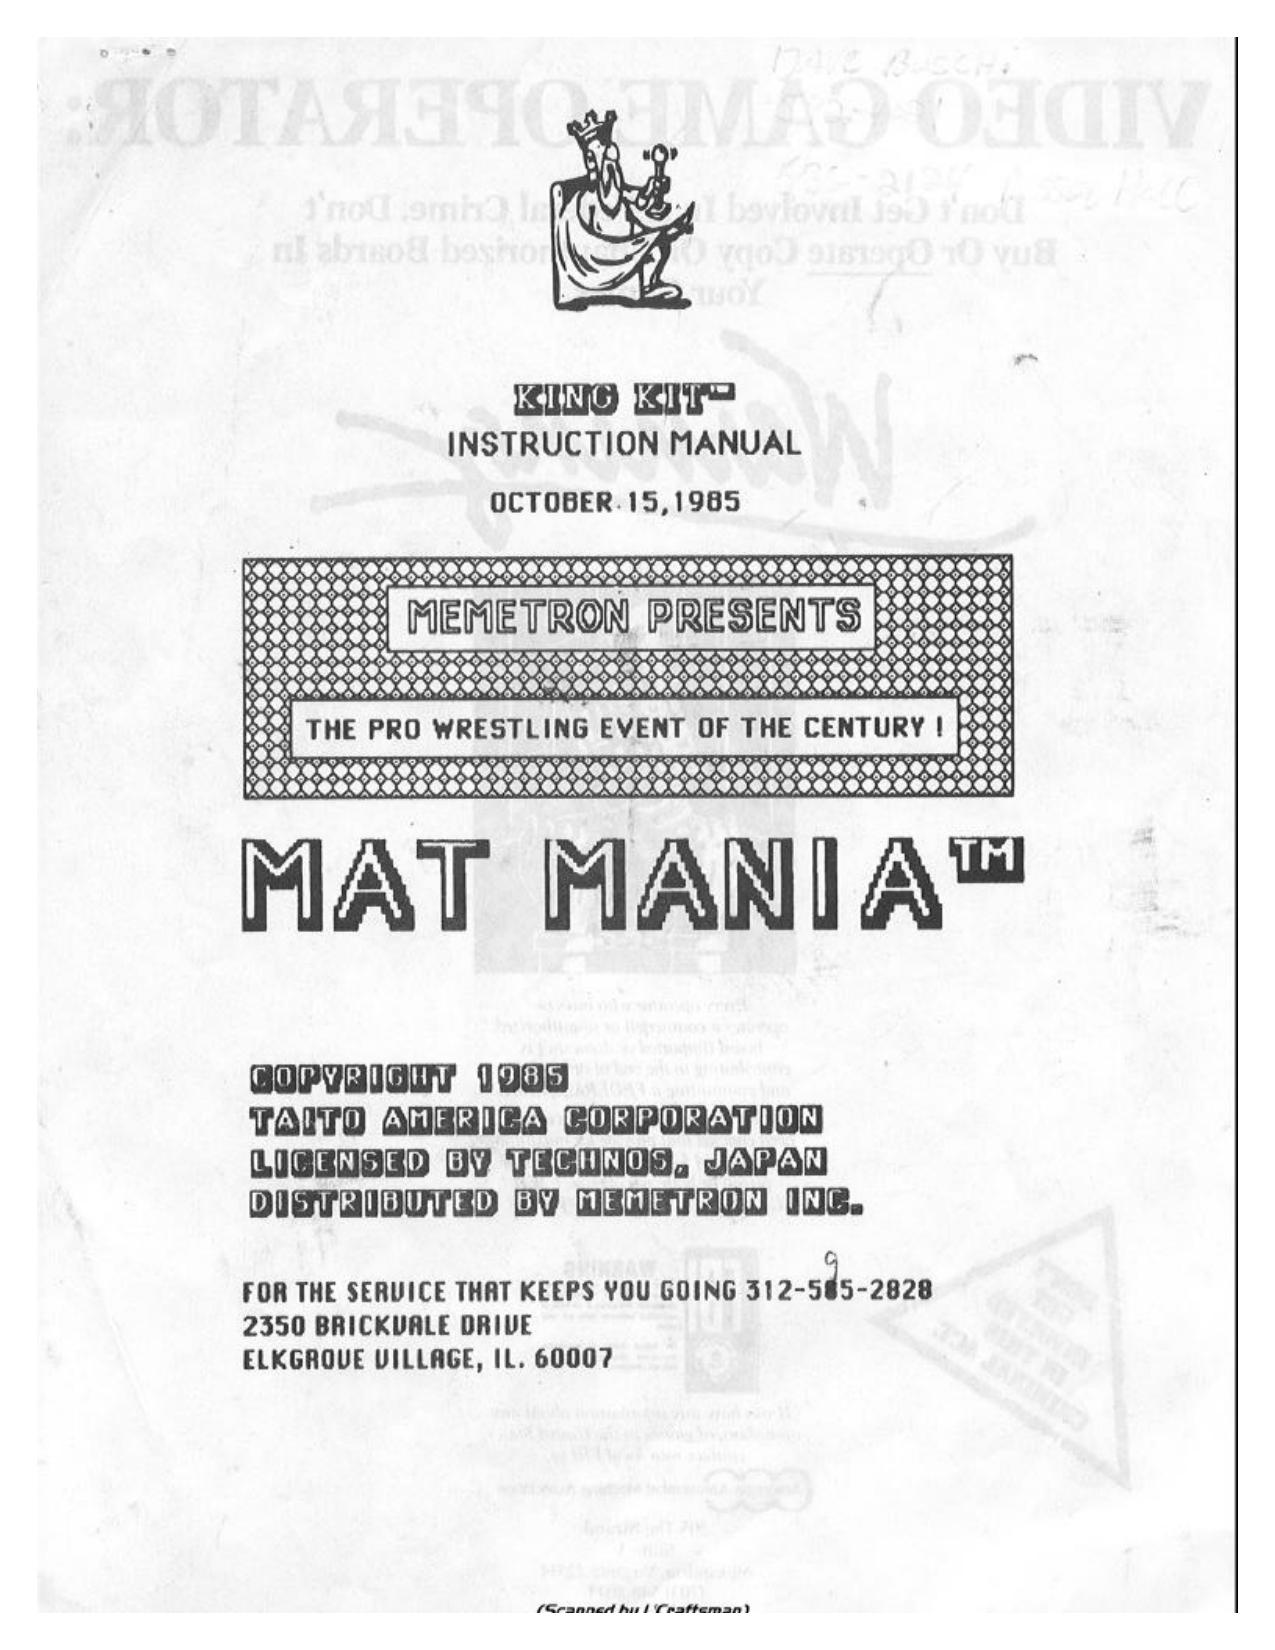 Mat Mania (Instructions) (U)